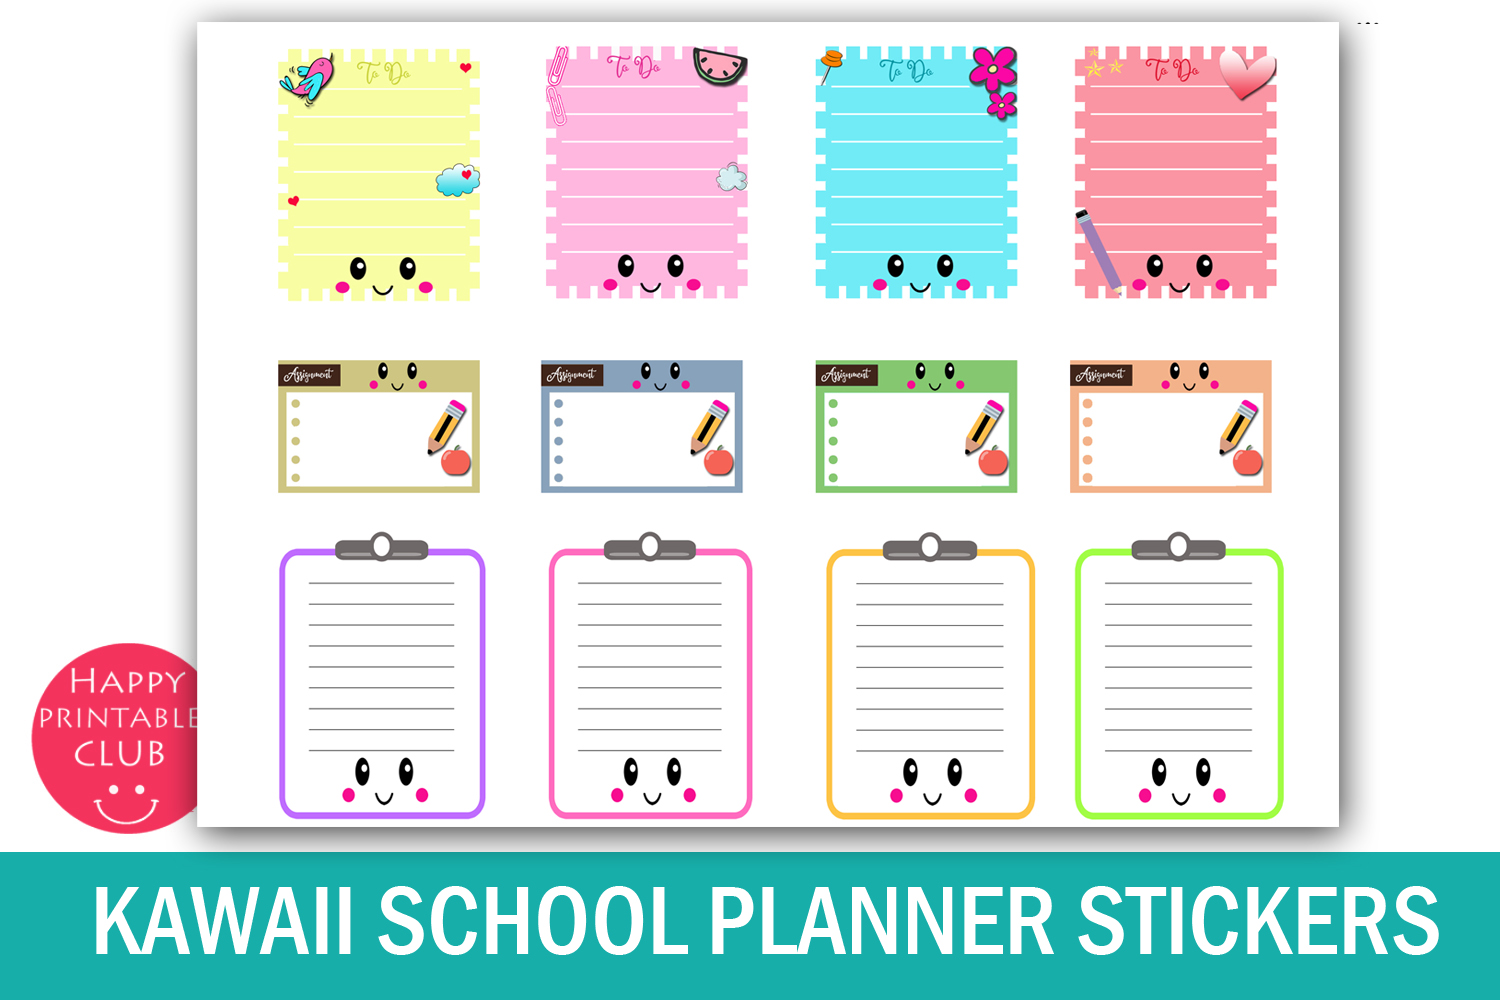 Kawaii School Planner Stickers School Planner Stickers